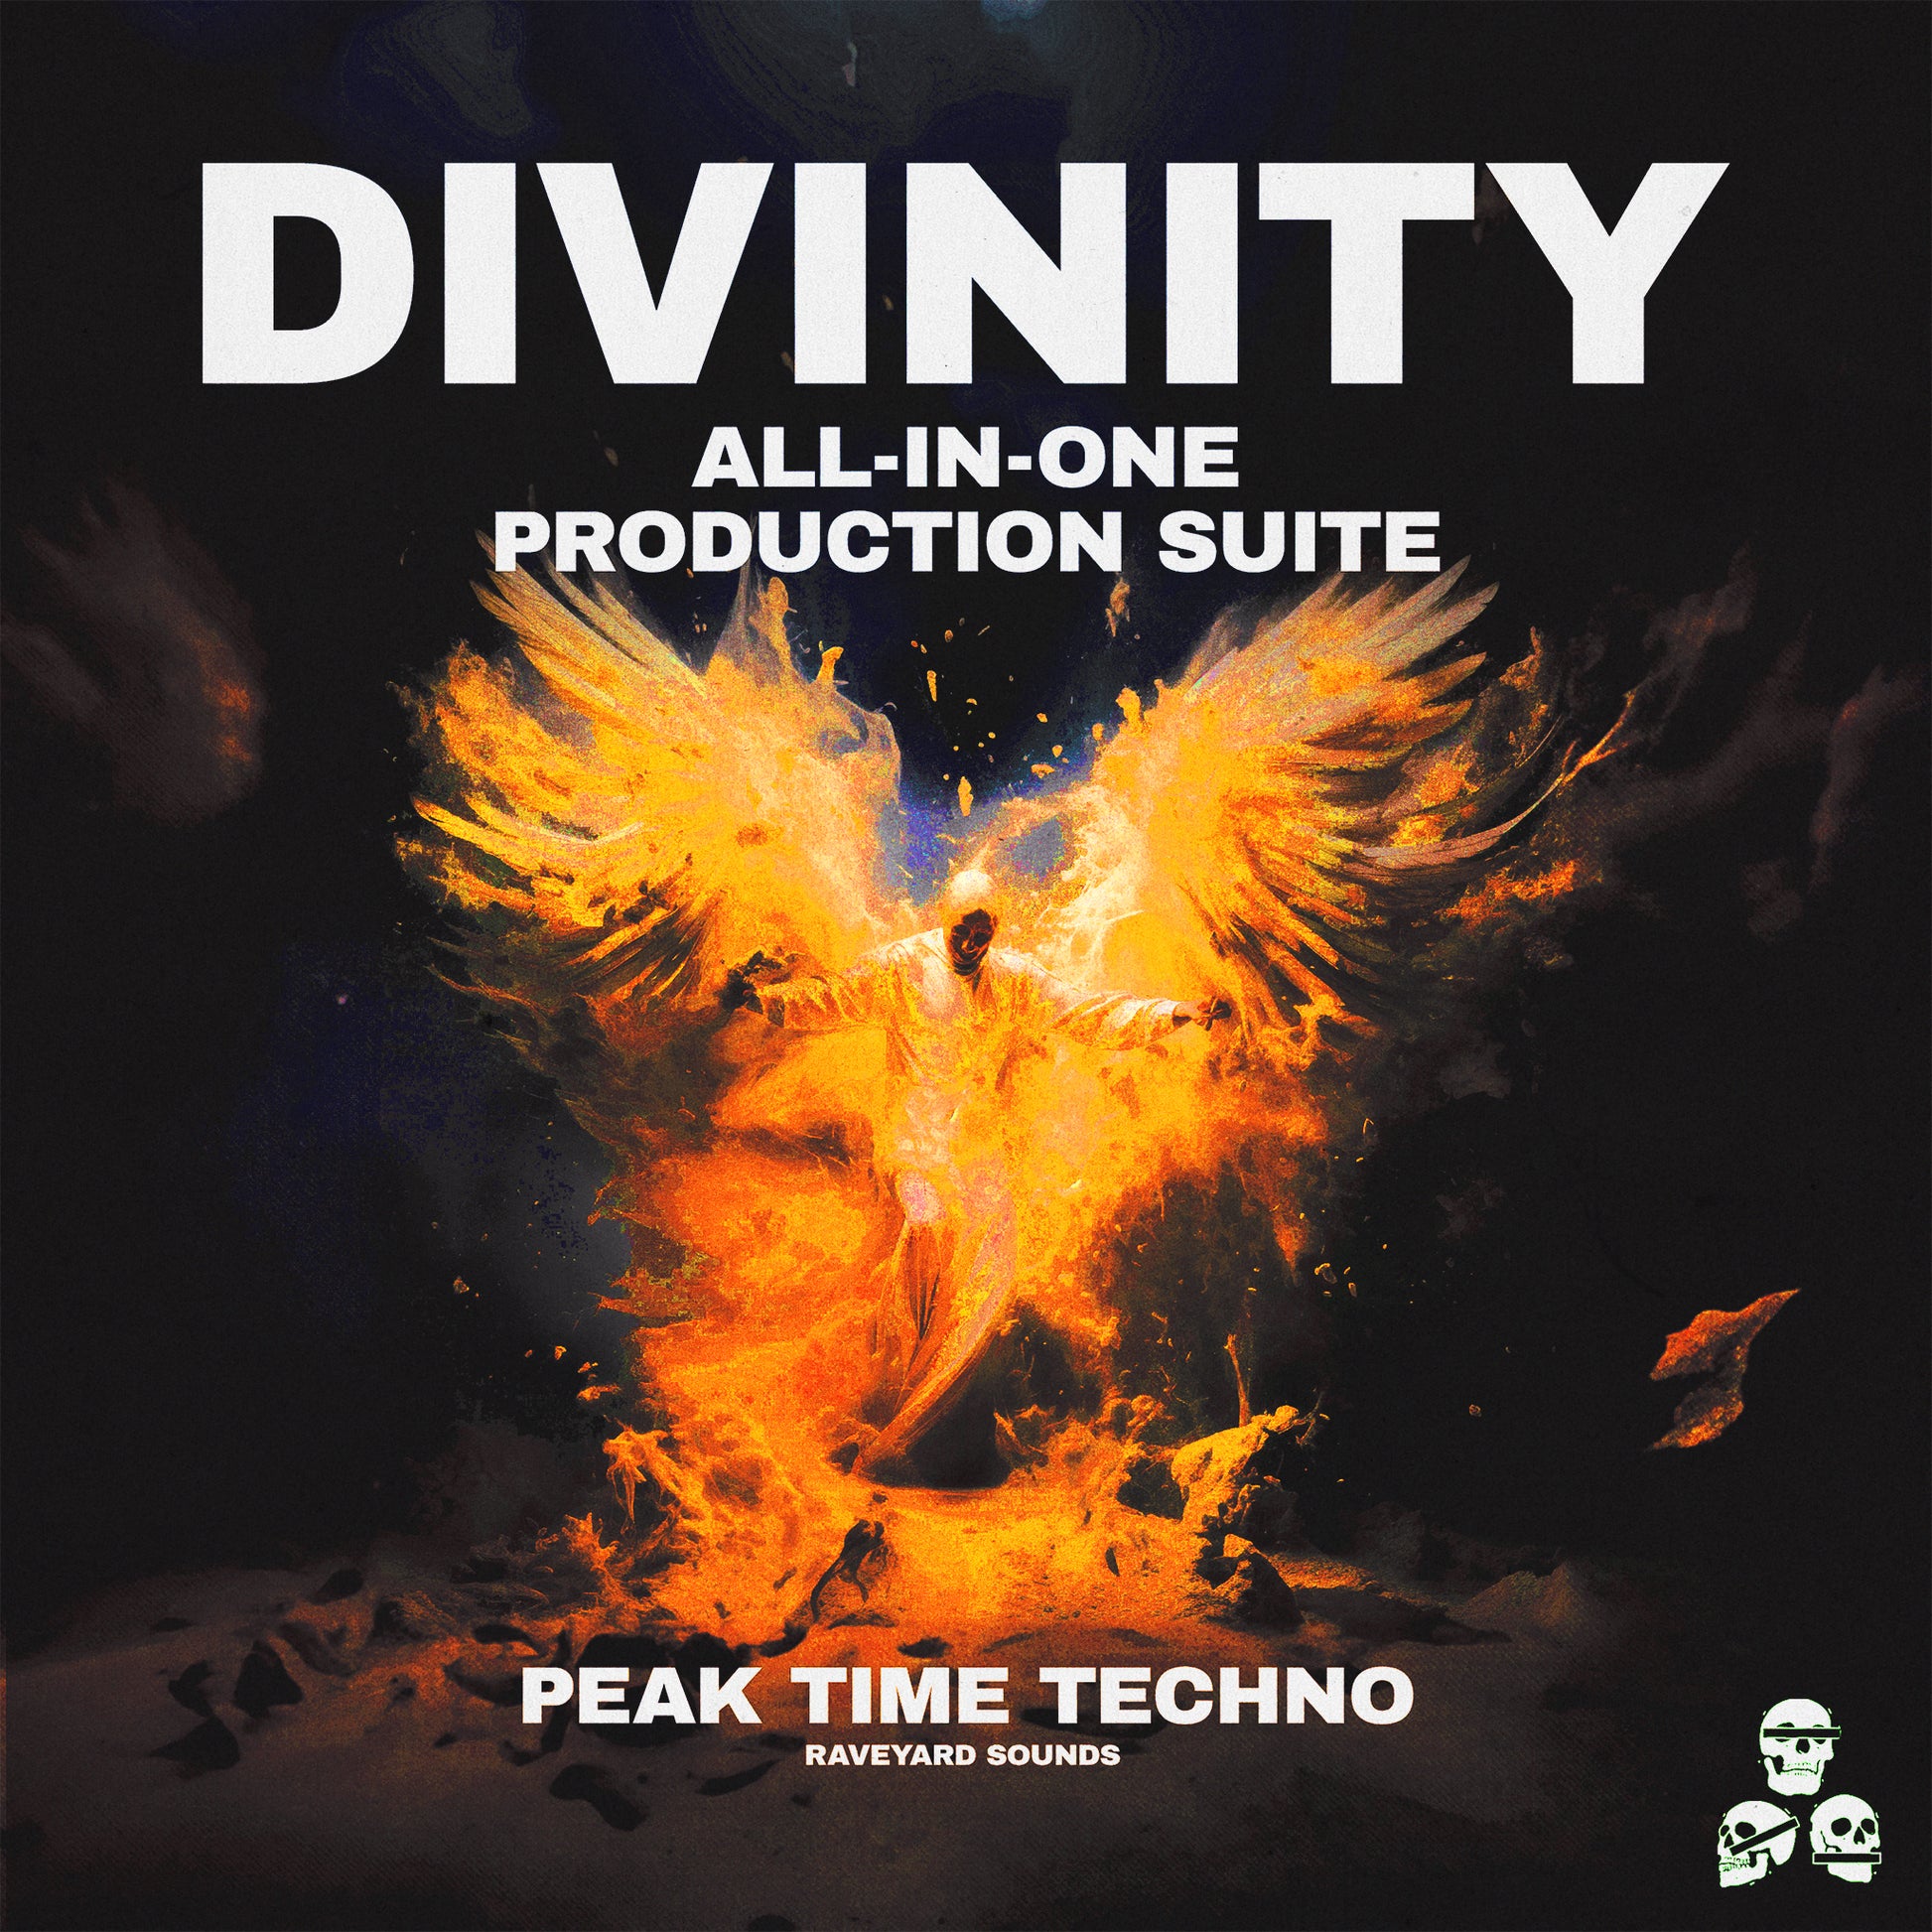 Divinity Peak Time Techno Production Suite